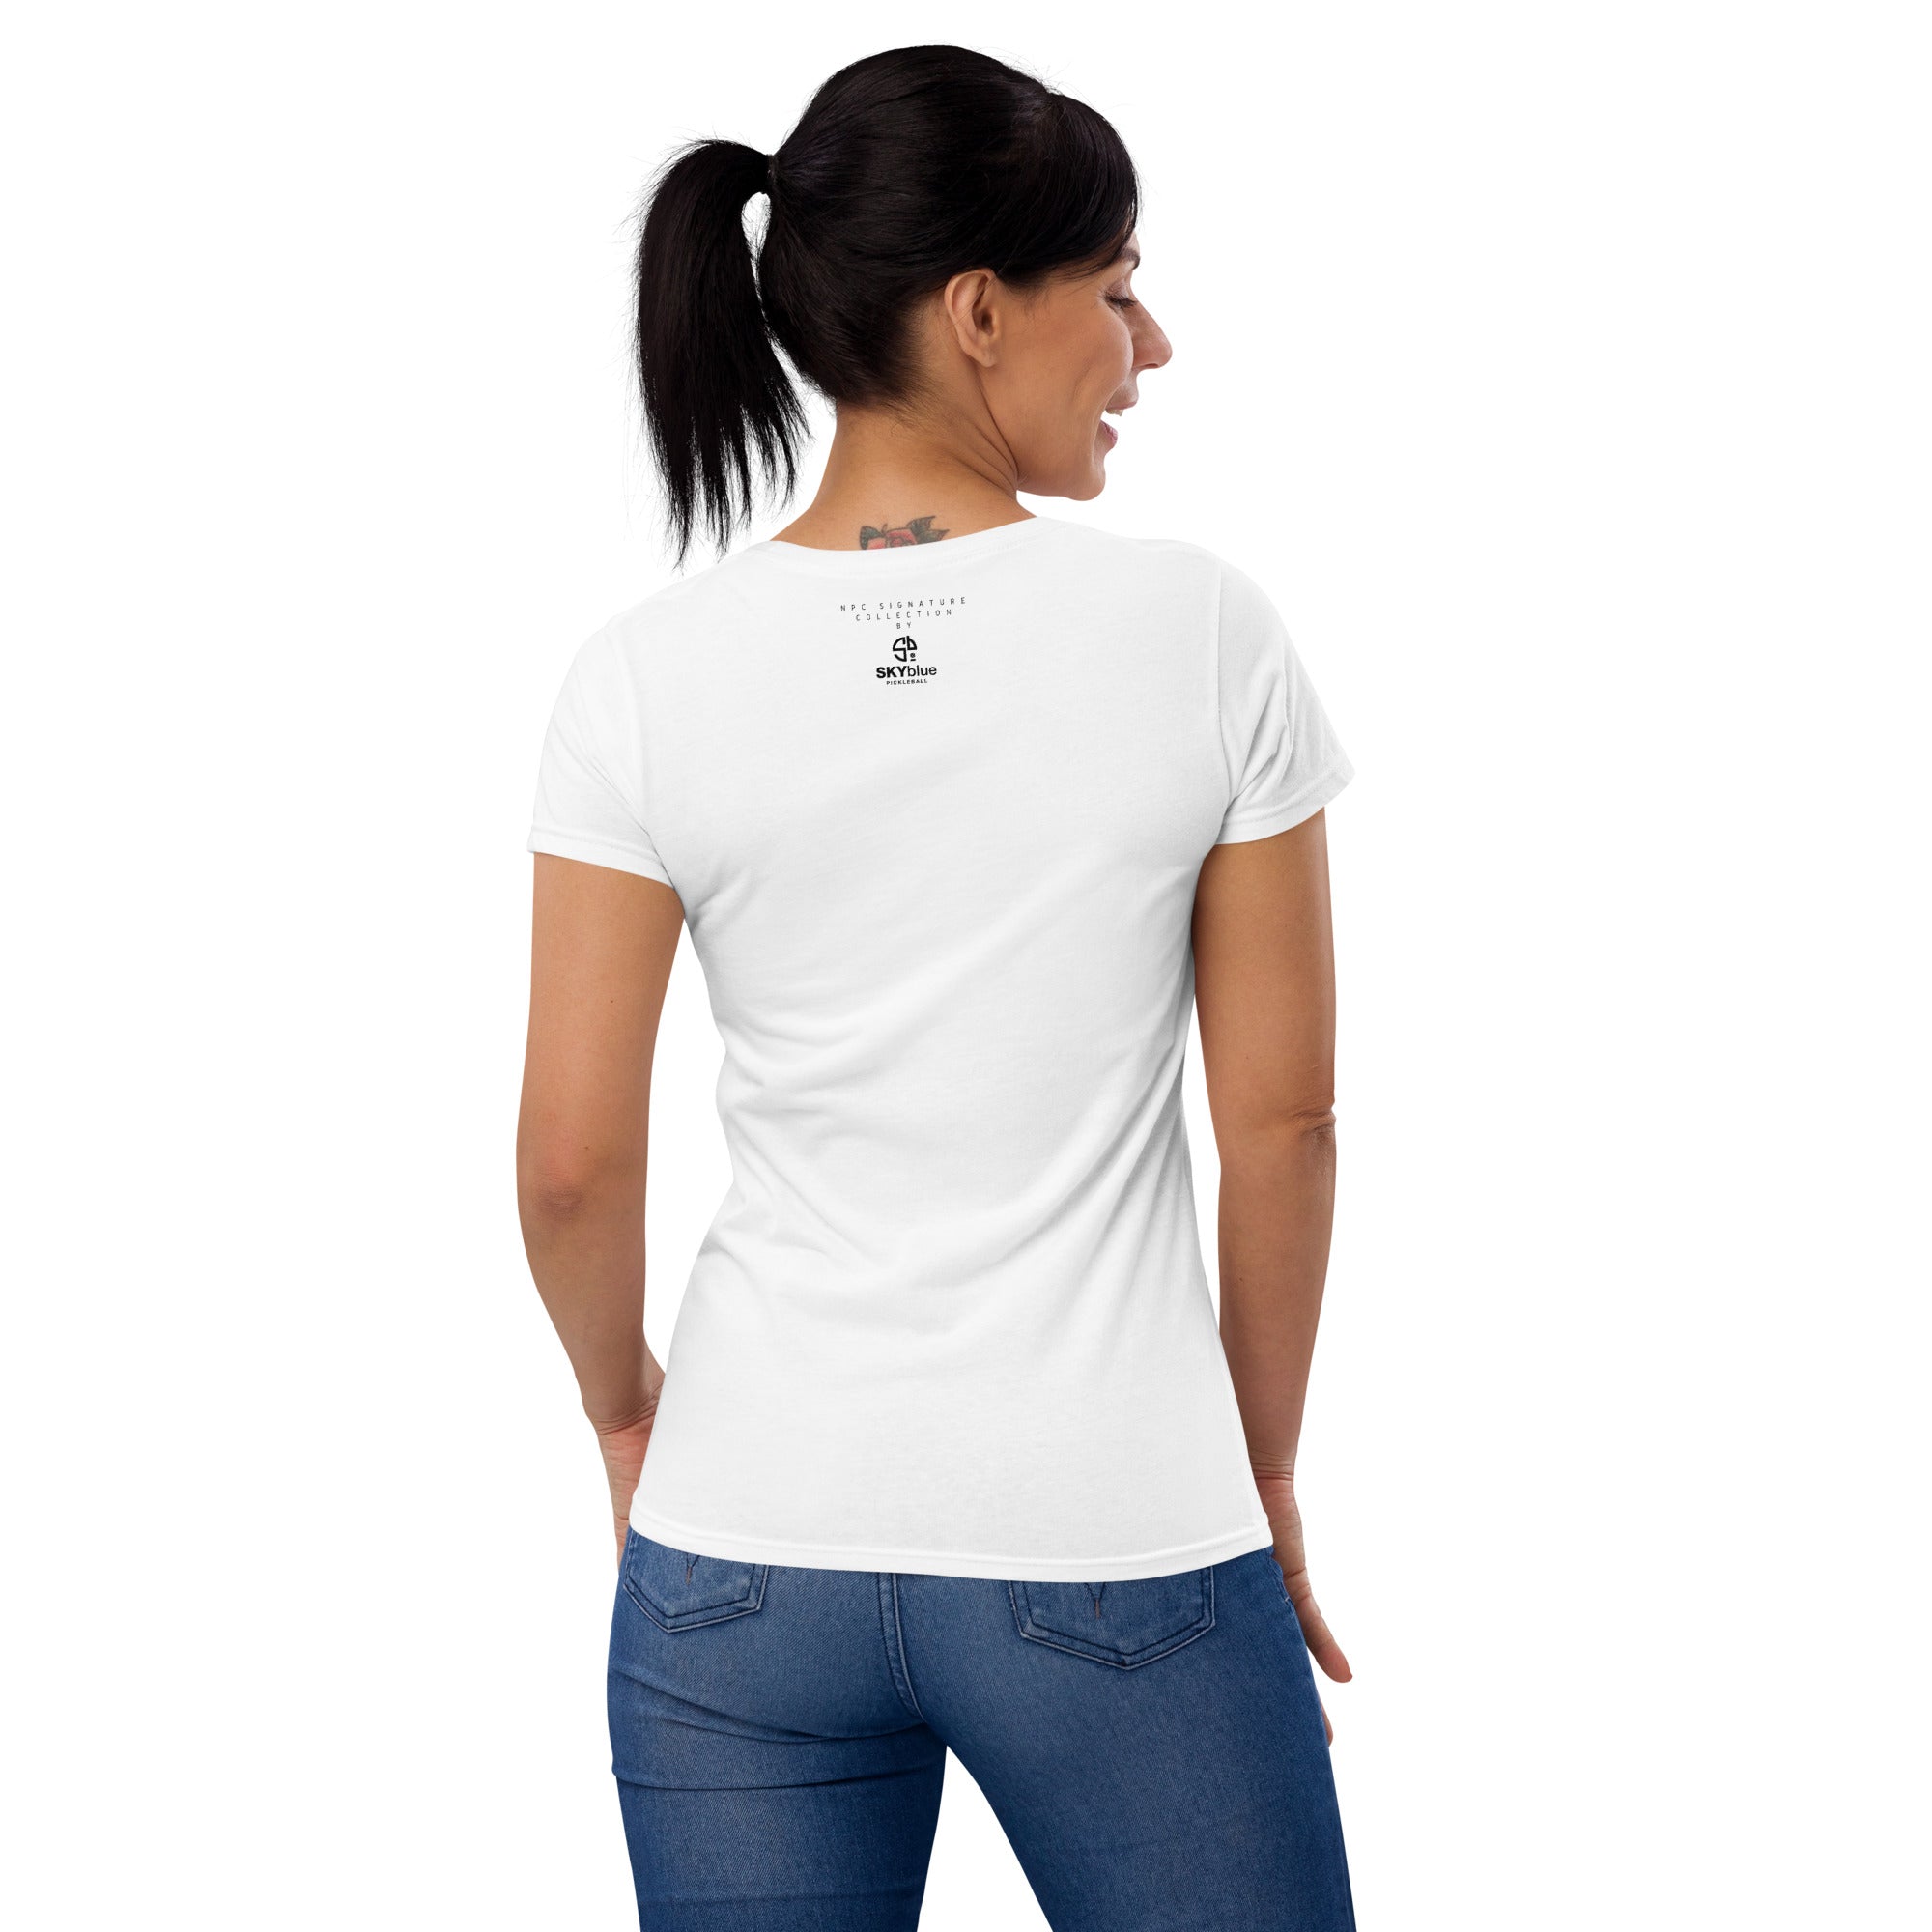 NPC Signature Collection "Naples Pickleball Center Neon!" Women's short sleeve cotton t-shirt!